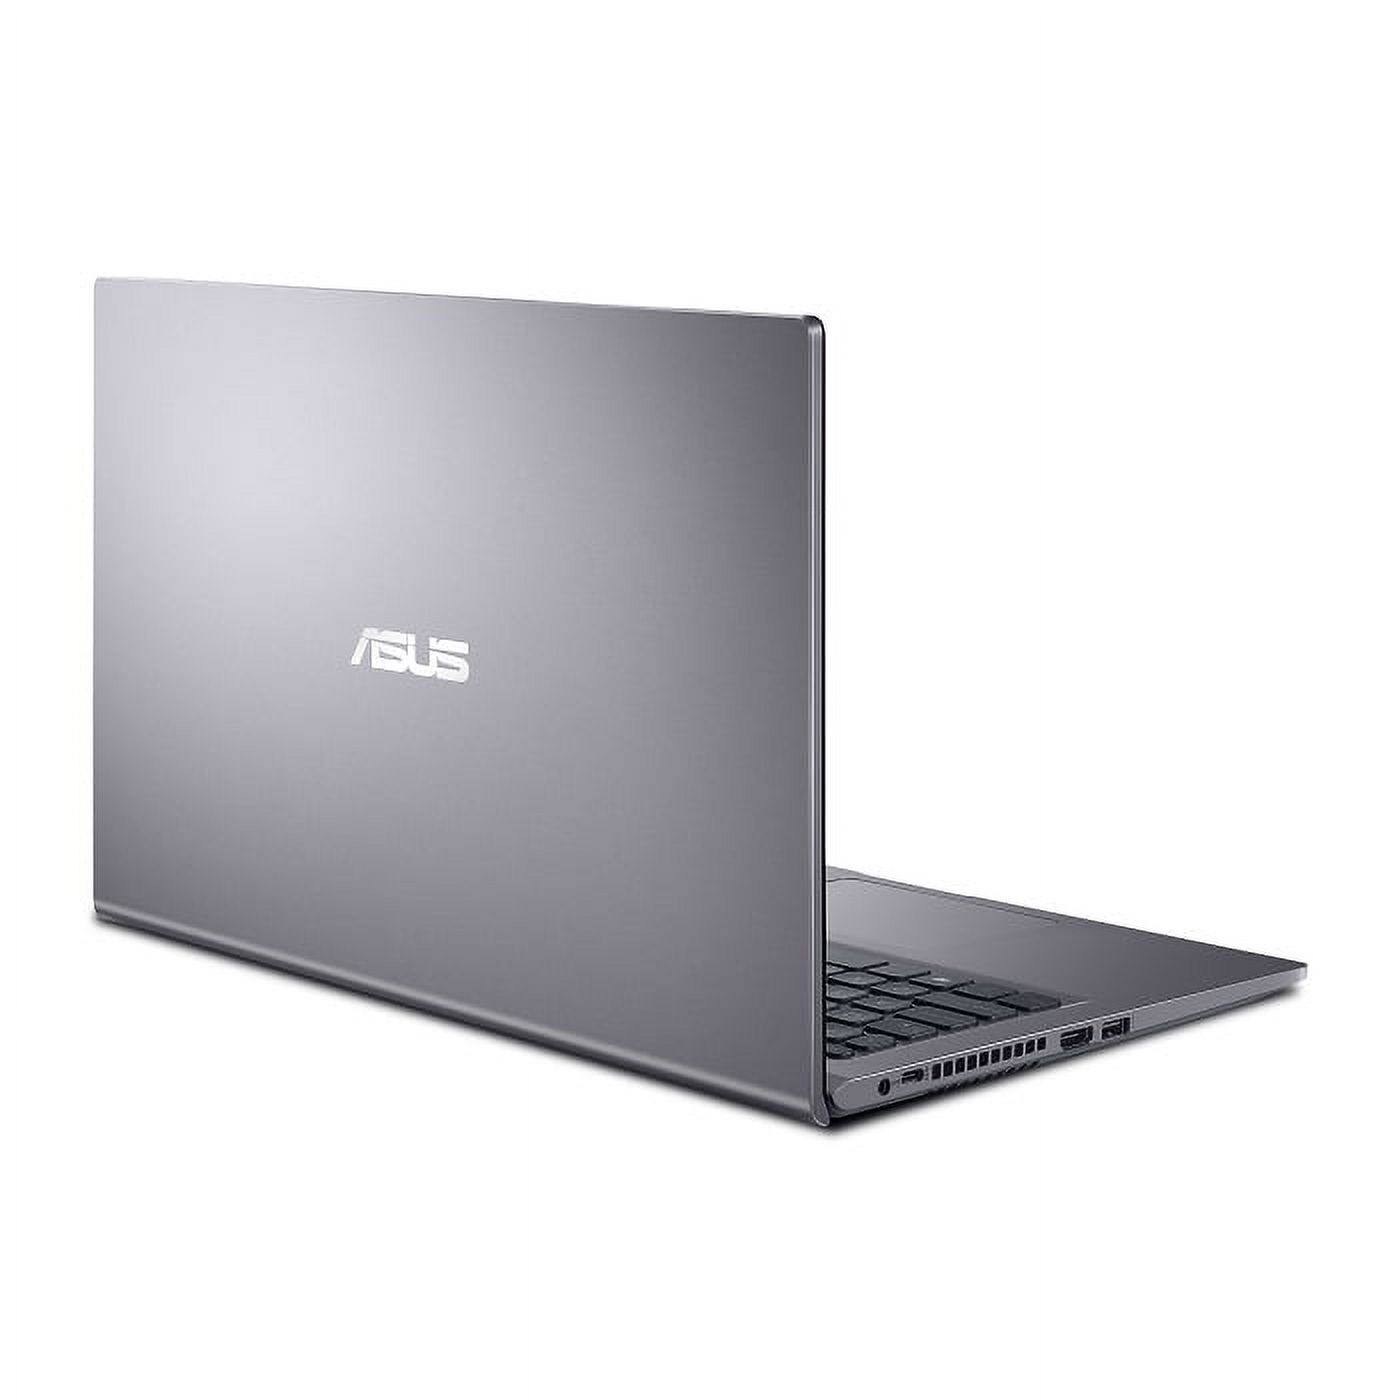 ASUS VivoBook 15.6" 1080p PC Laptops, Intel Core i3, 4GB RAM, 128GB SSD, Windows 11 Home in S Mode, Slate Gray, F515EA-WS31 - image 4 of 6